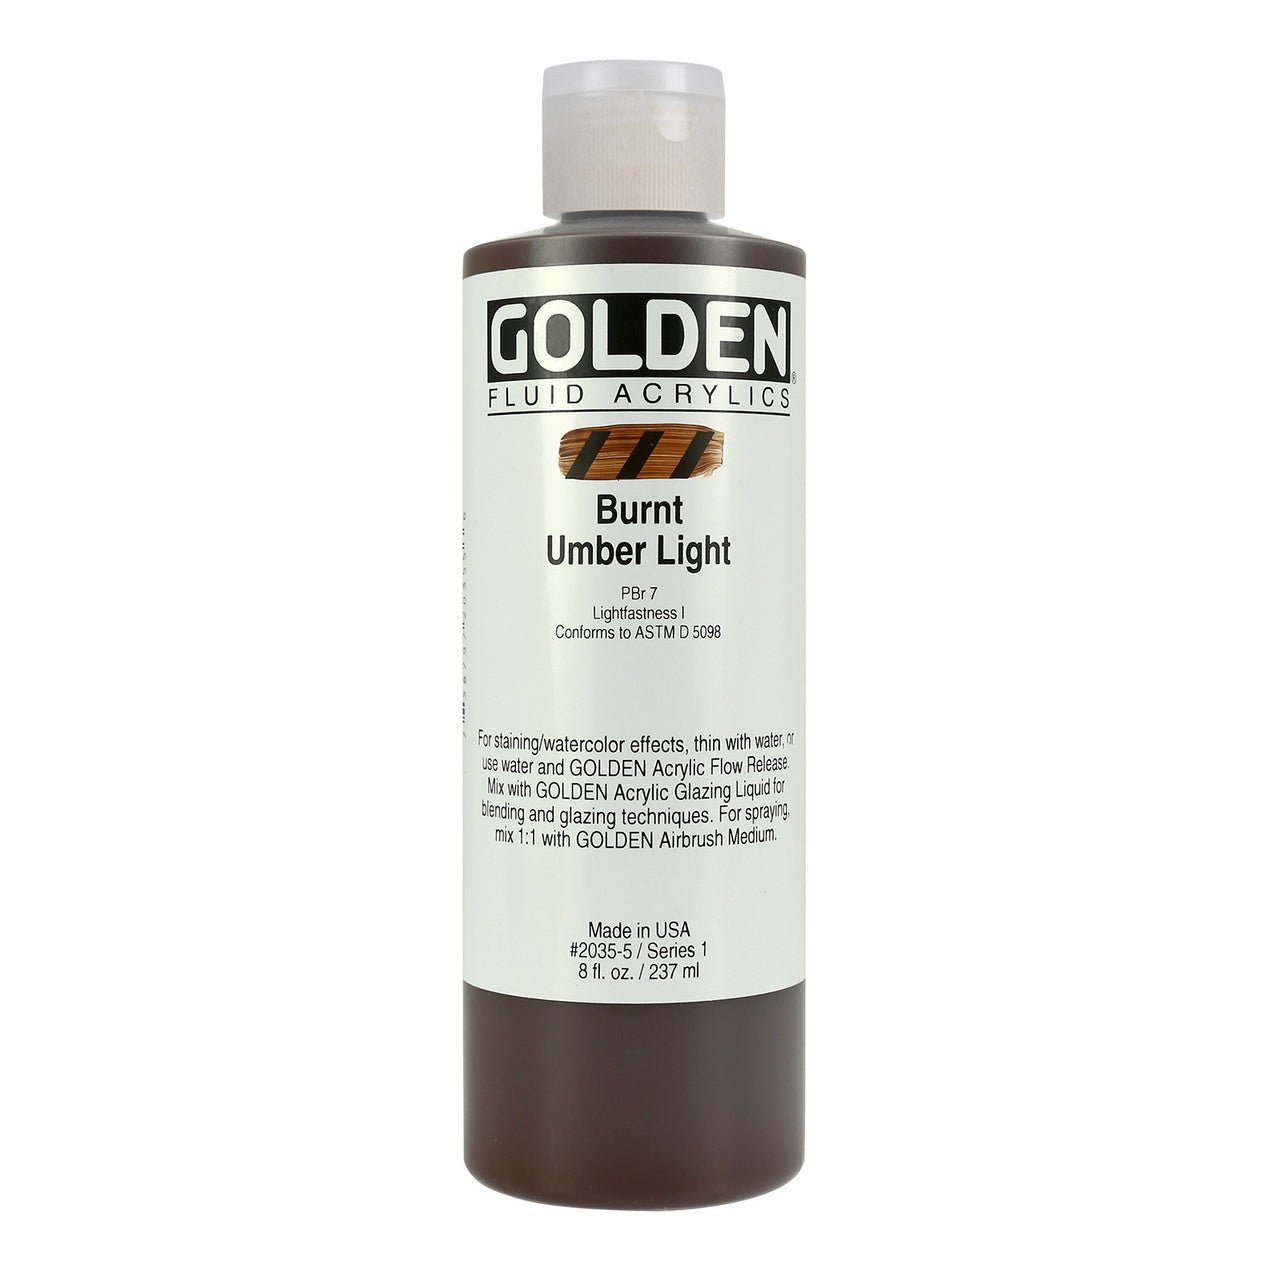 Golden Fluid Acrylic Burnt Umber Light 8 oz - merriartist.com